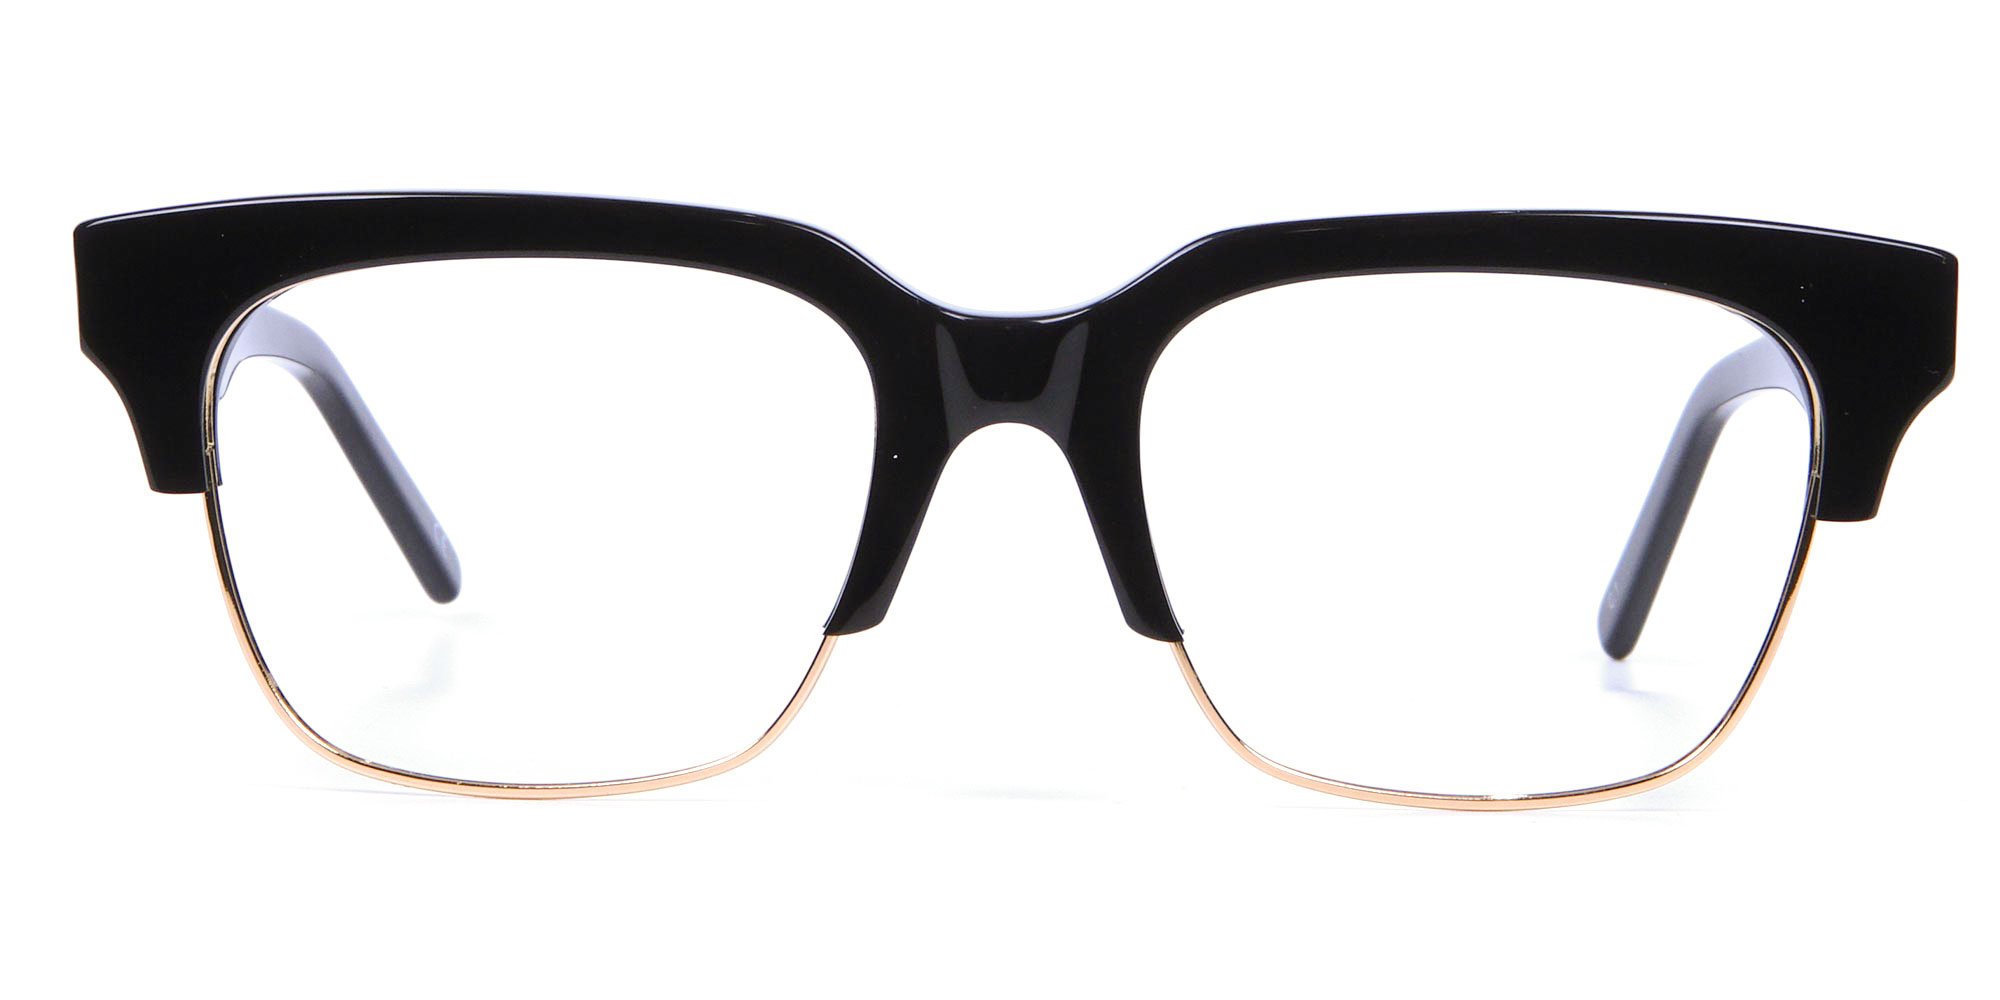  90's Inspired Vintage Black hipster glasses